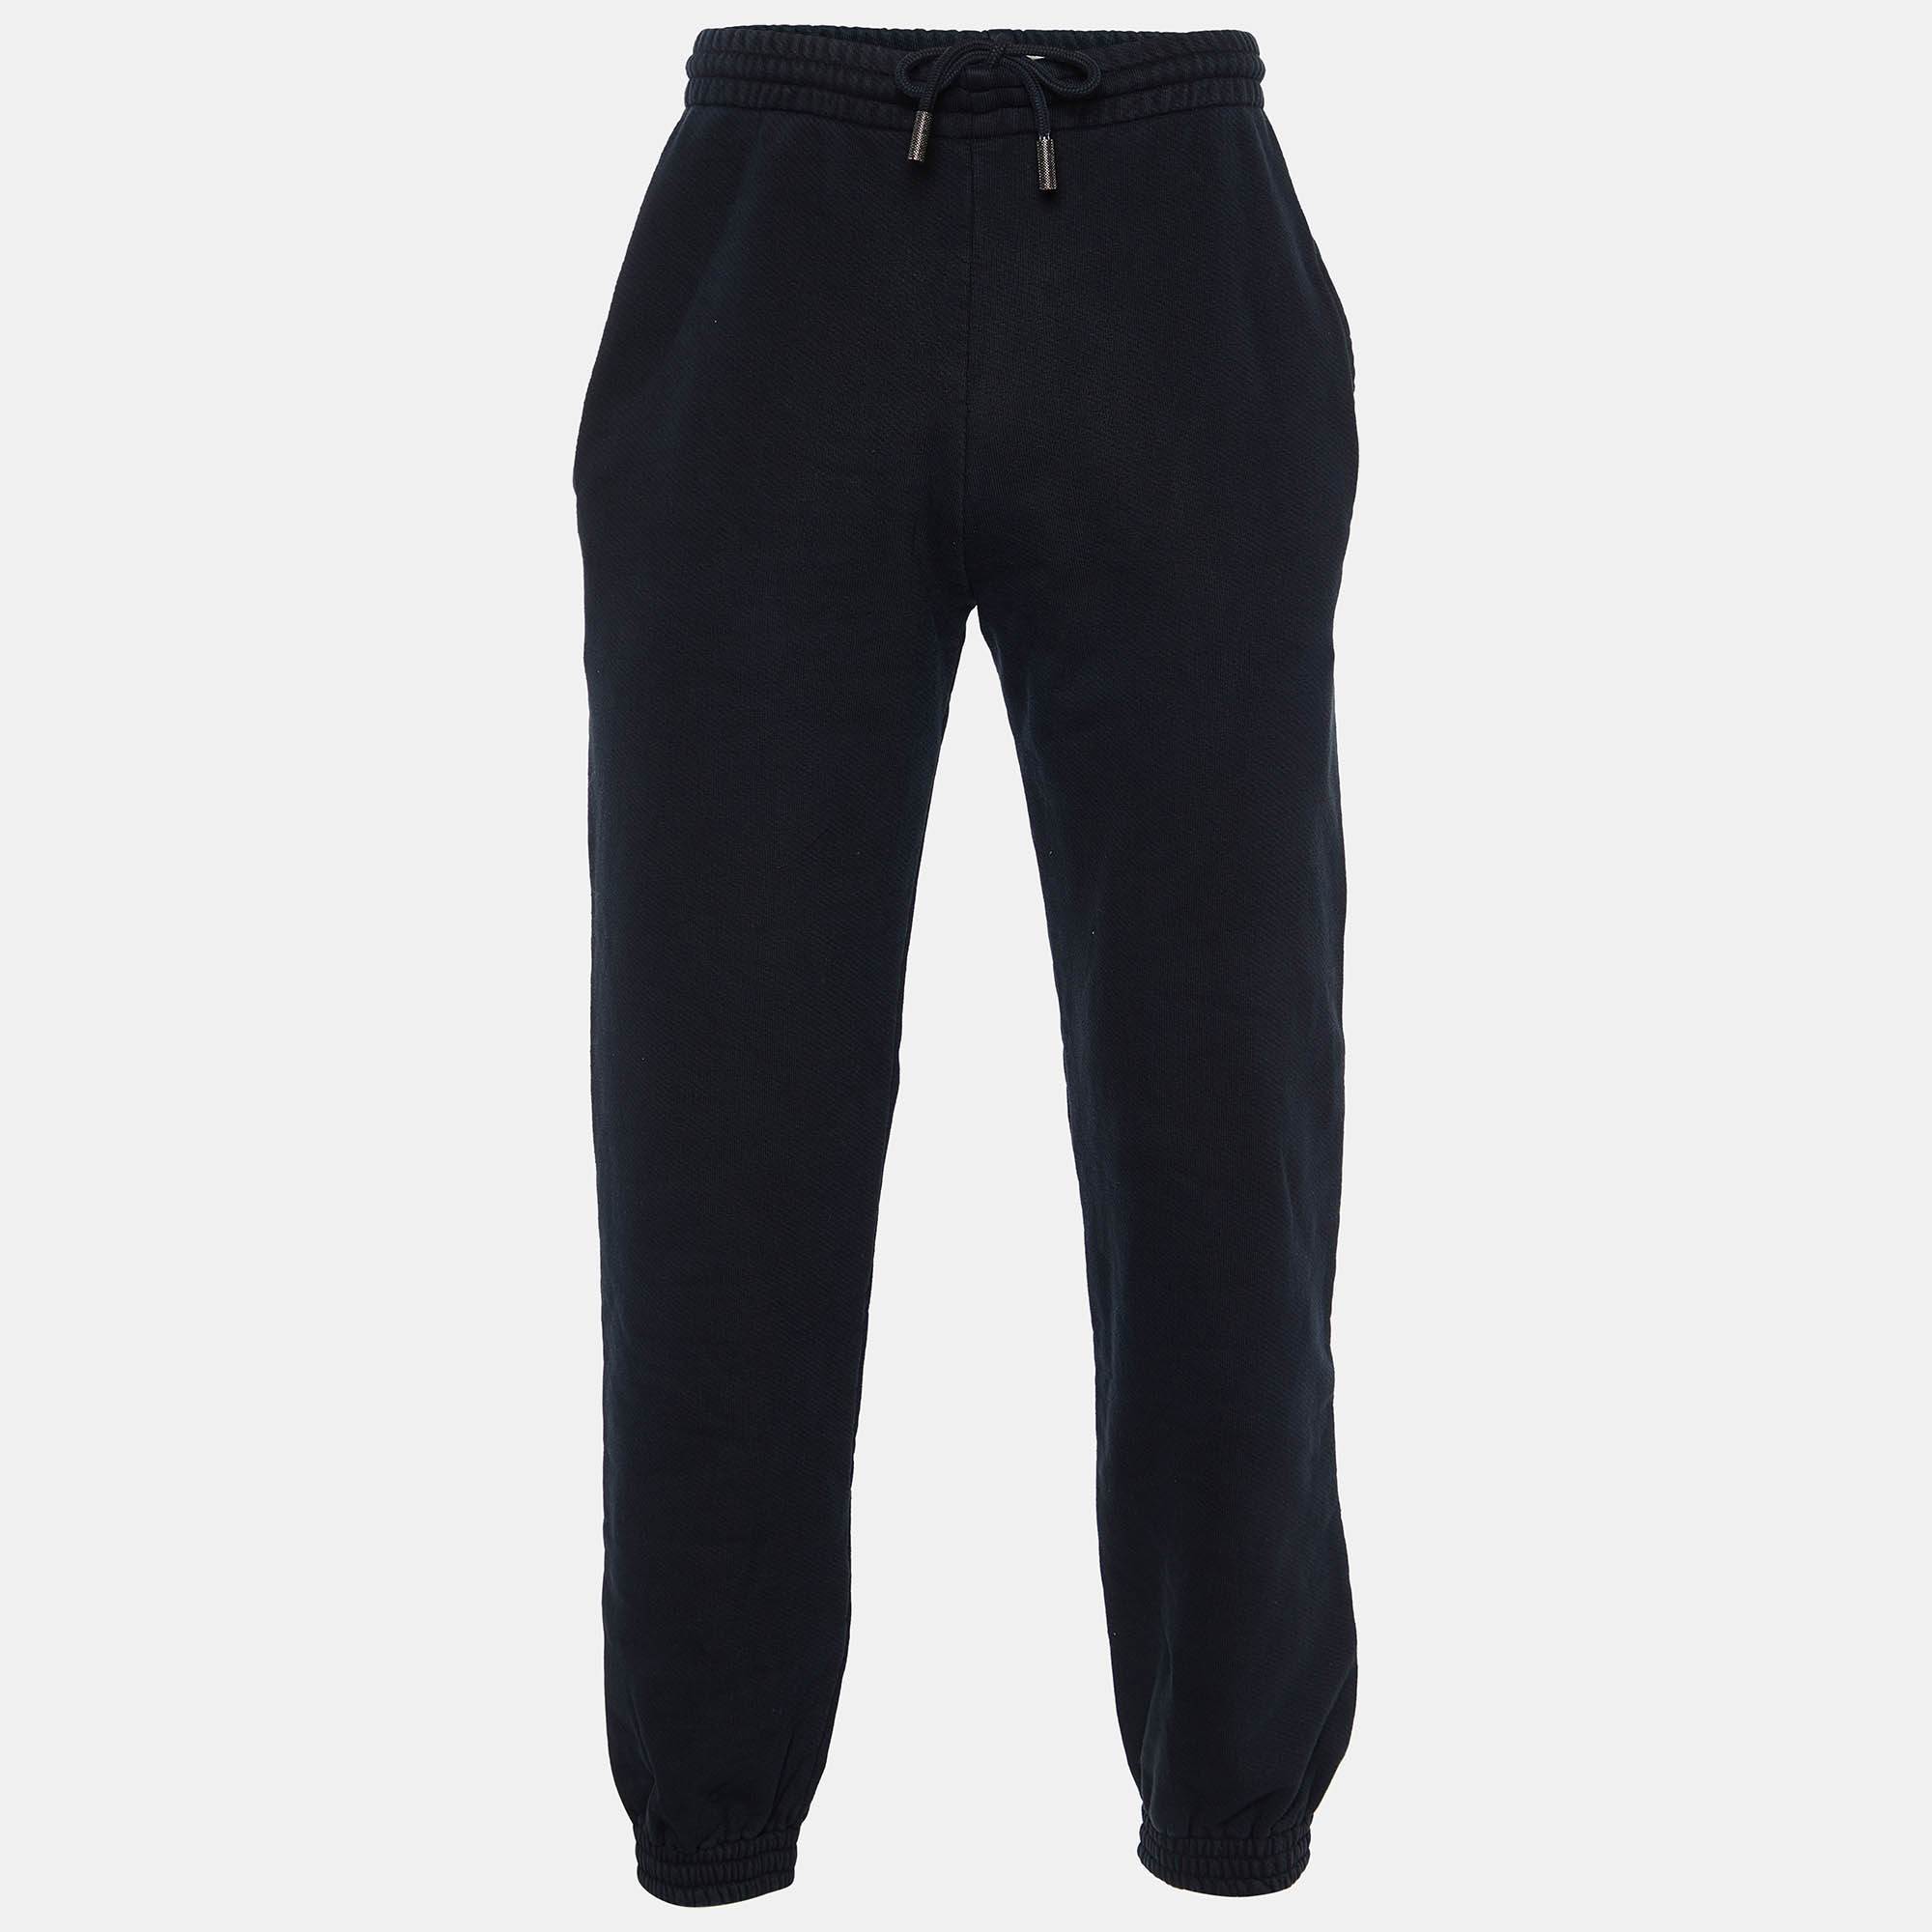 Off-white black printed cotton jogger pants m